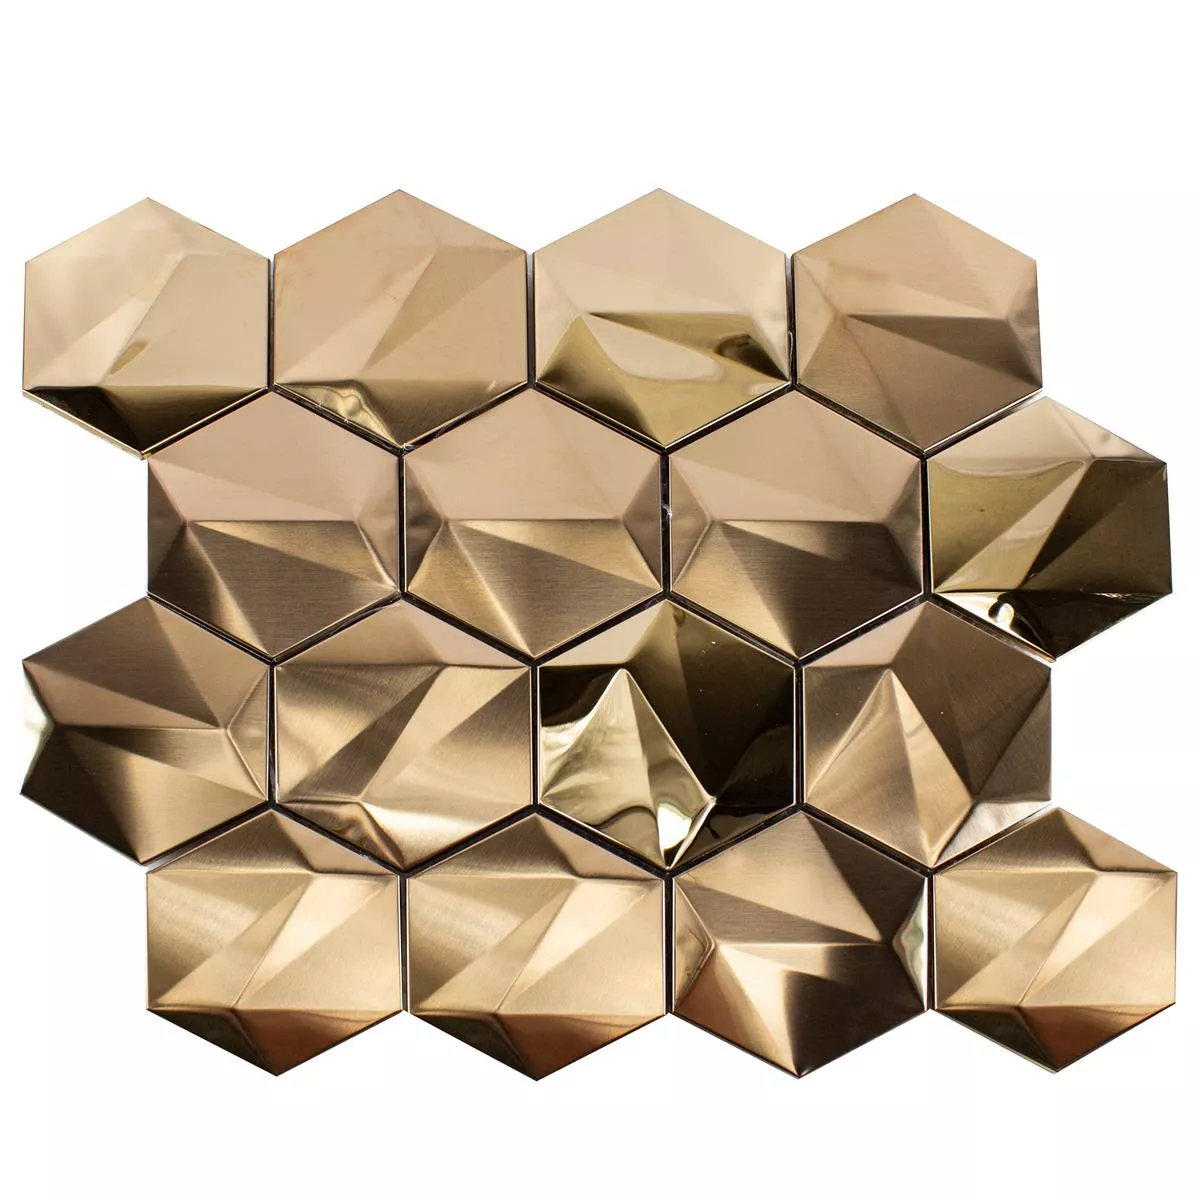 Stainless Steel Mosaic Tiles Durango Hexagon 3D Copper